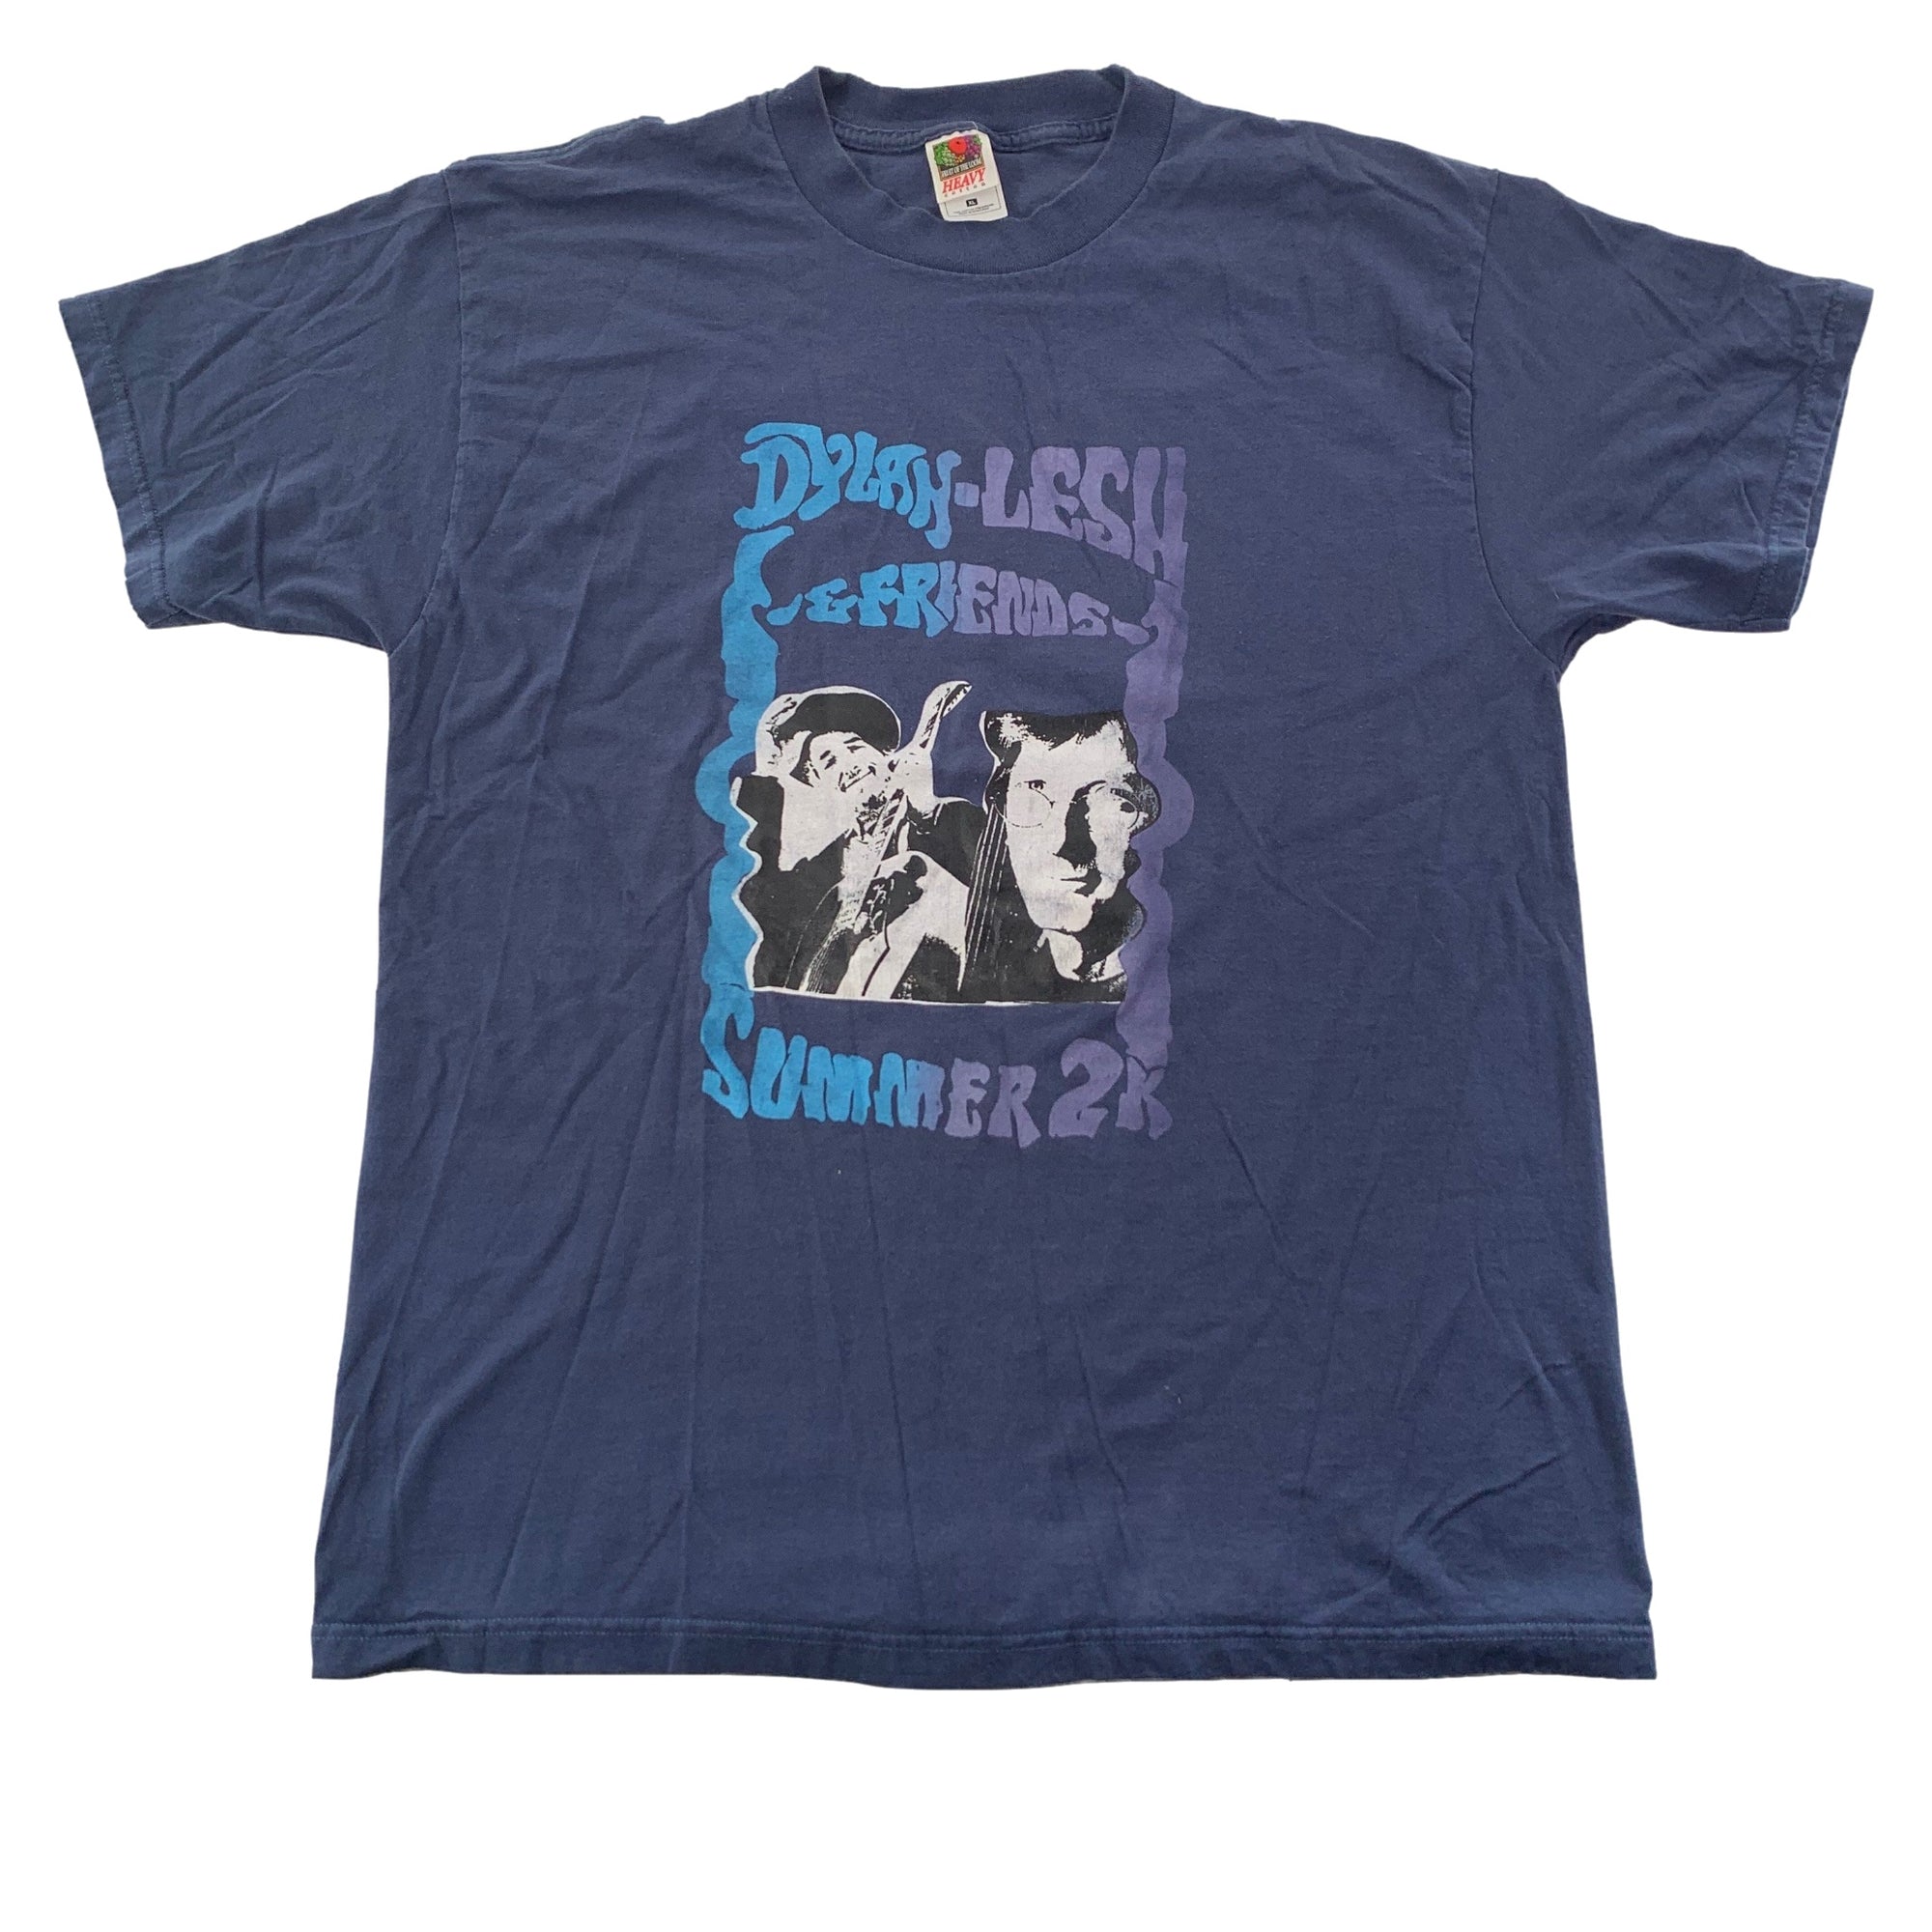 Vintage Dylan Lesh & Friends "Phylan Up" T-Shirt - jointcustodydc